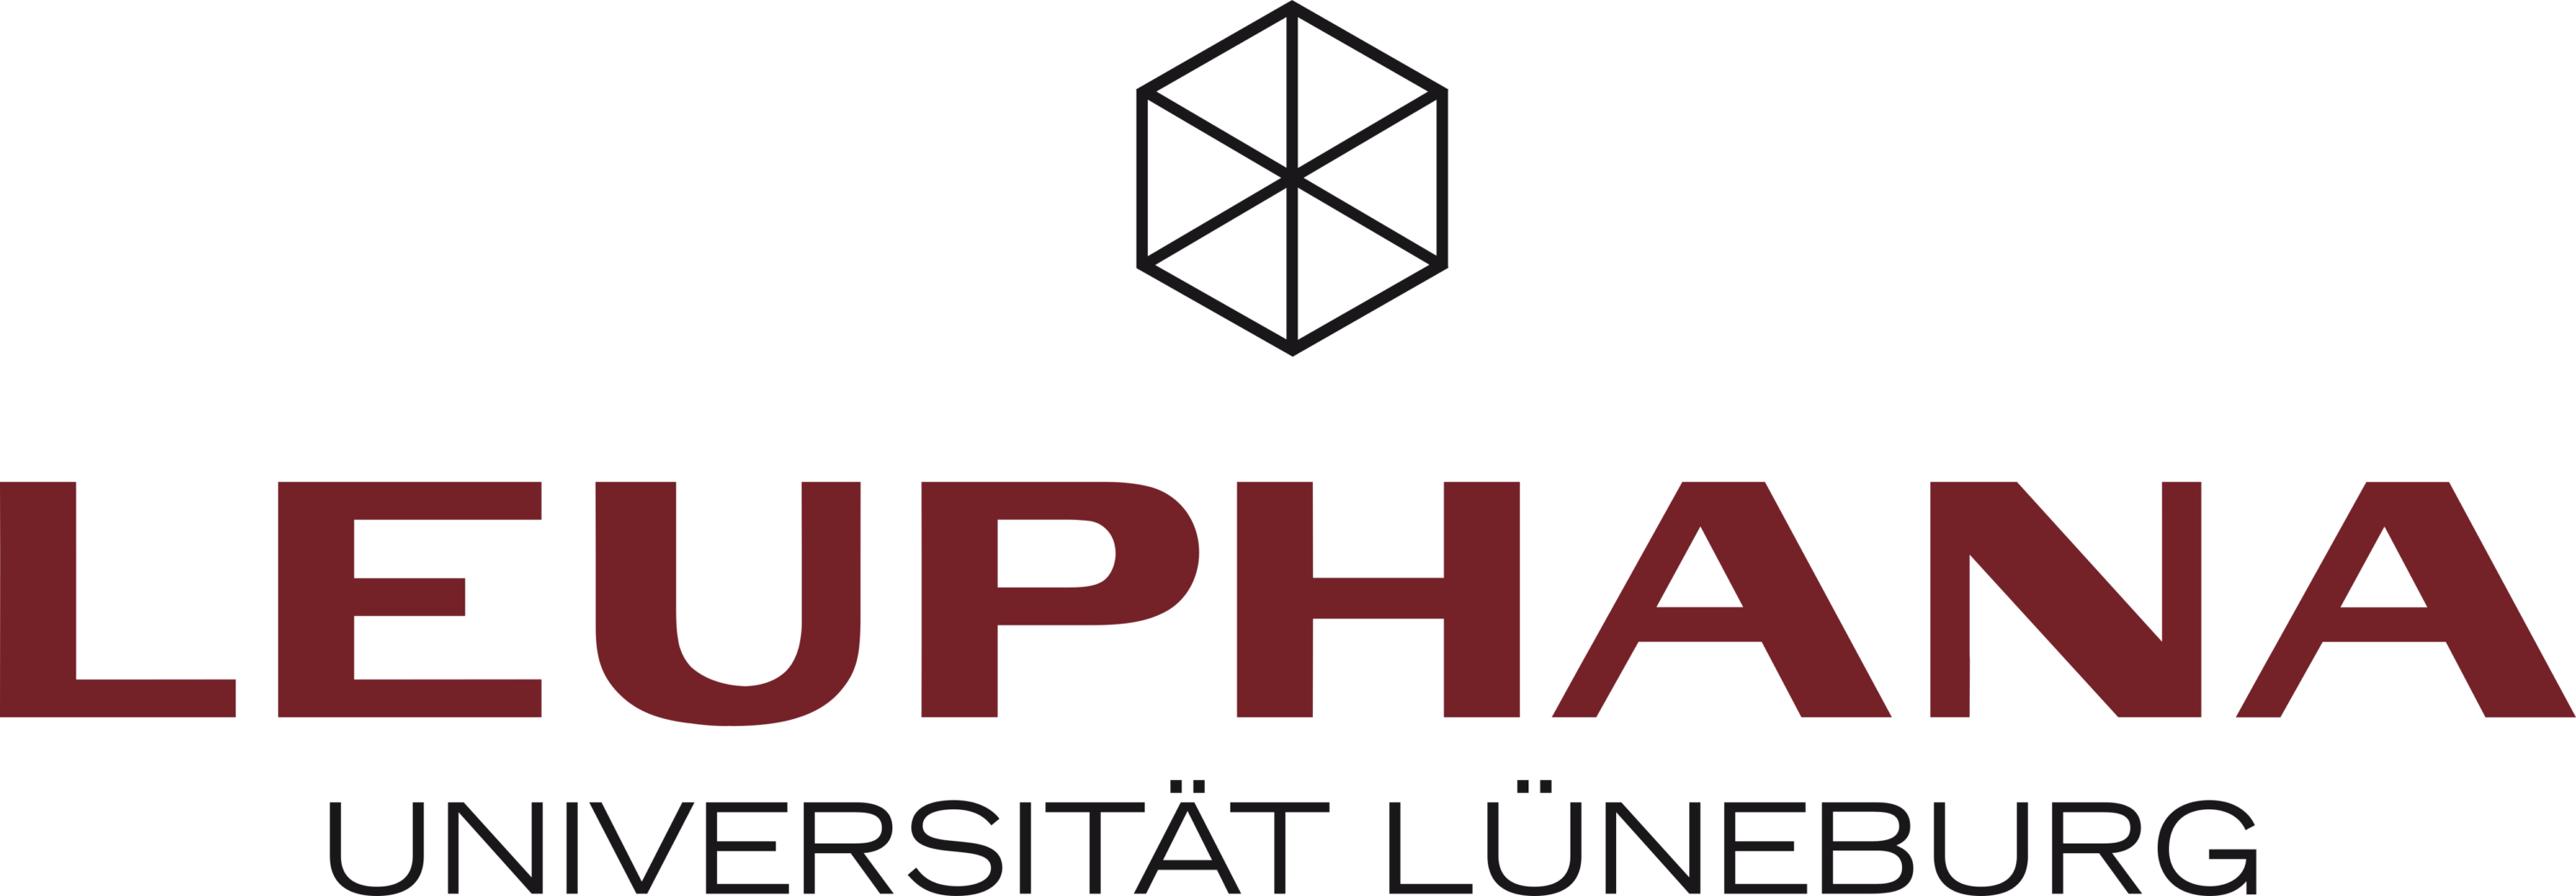 Leuphana Universitat Luneburg Logo